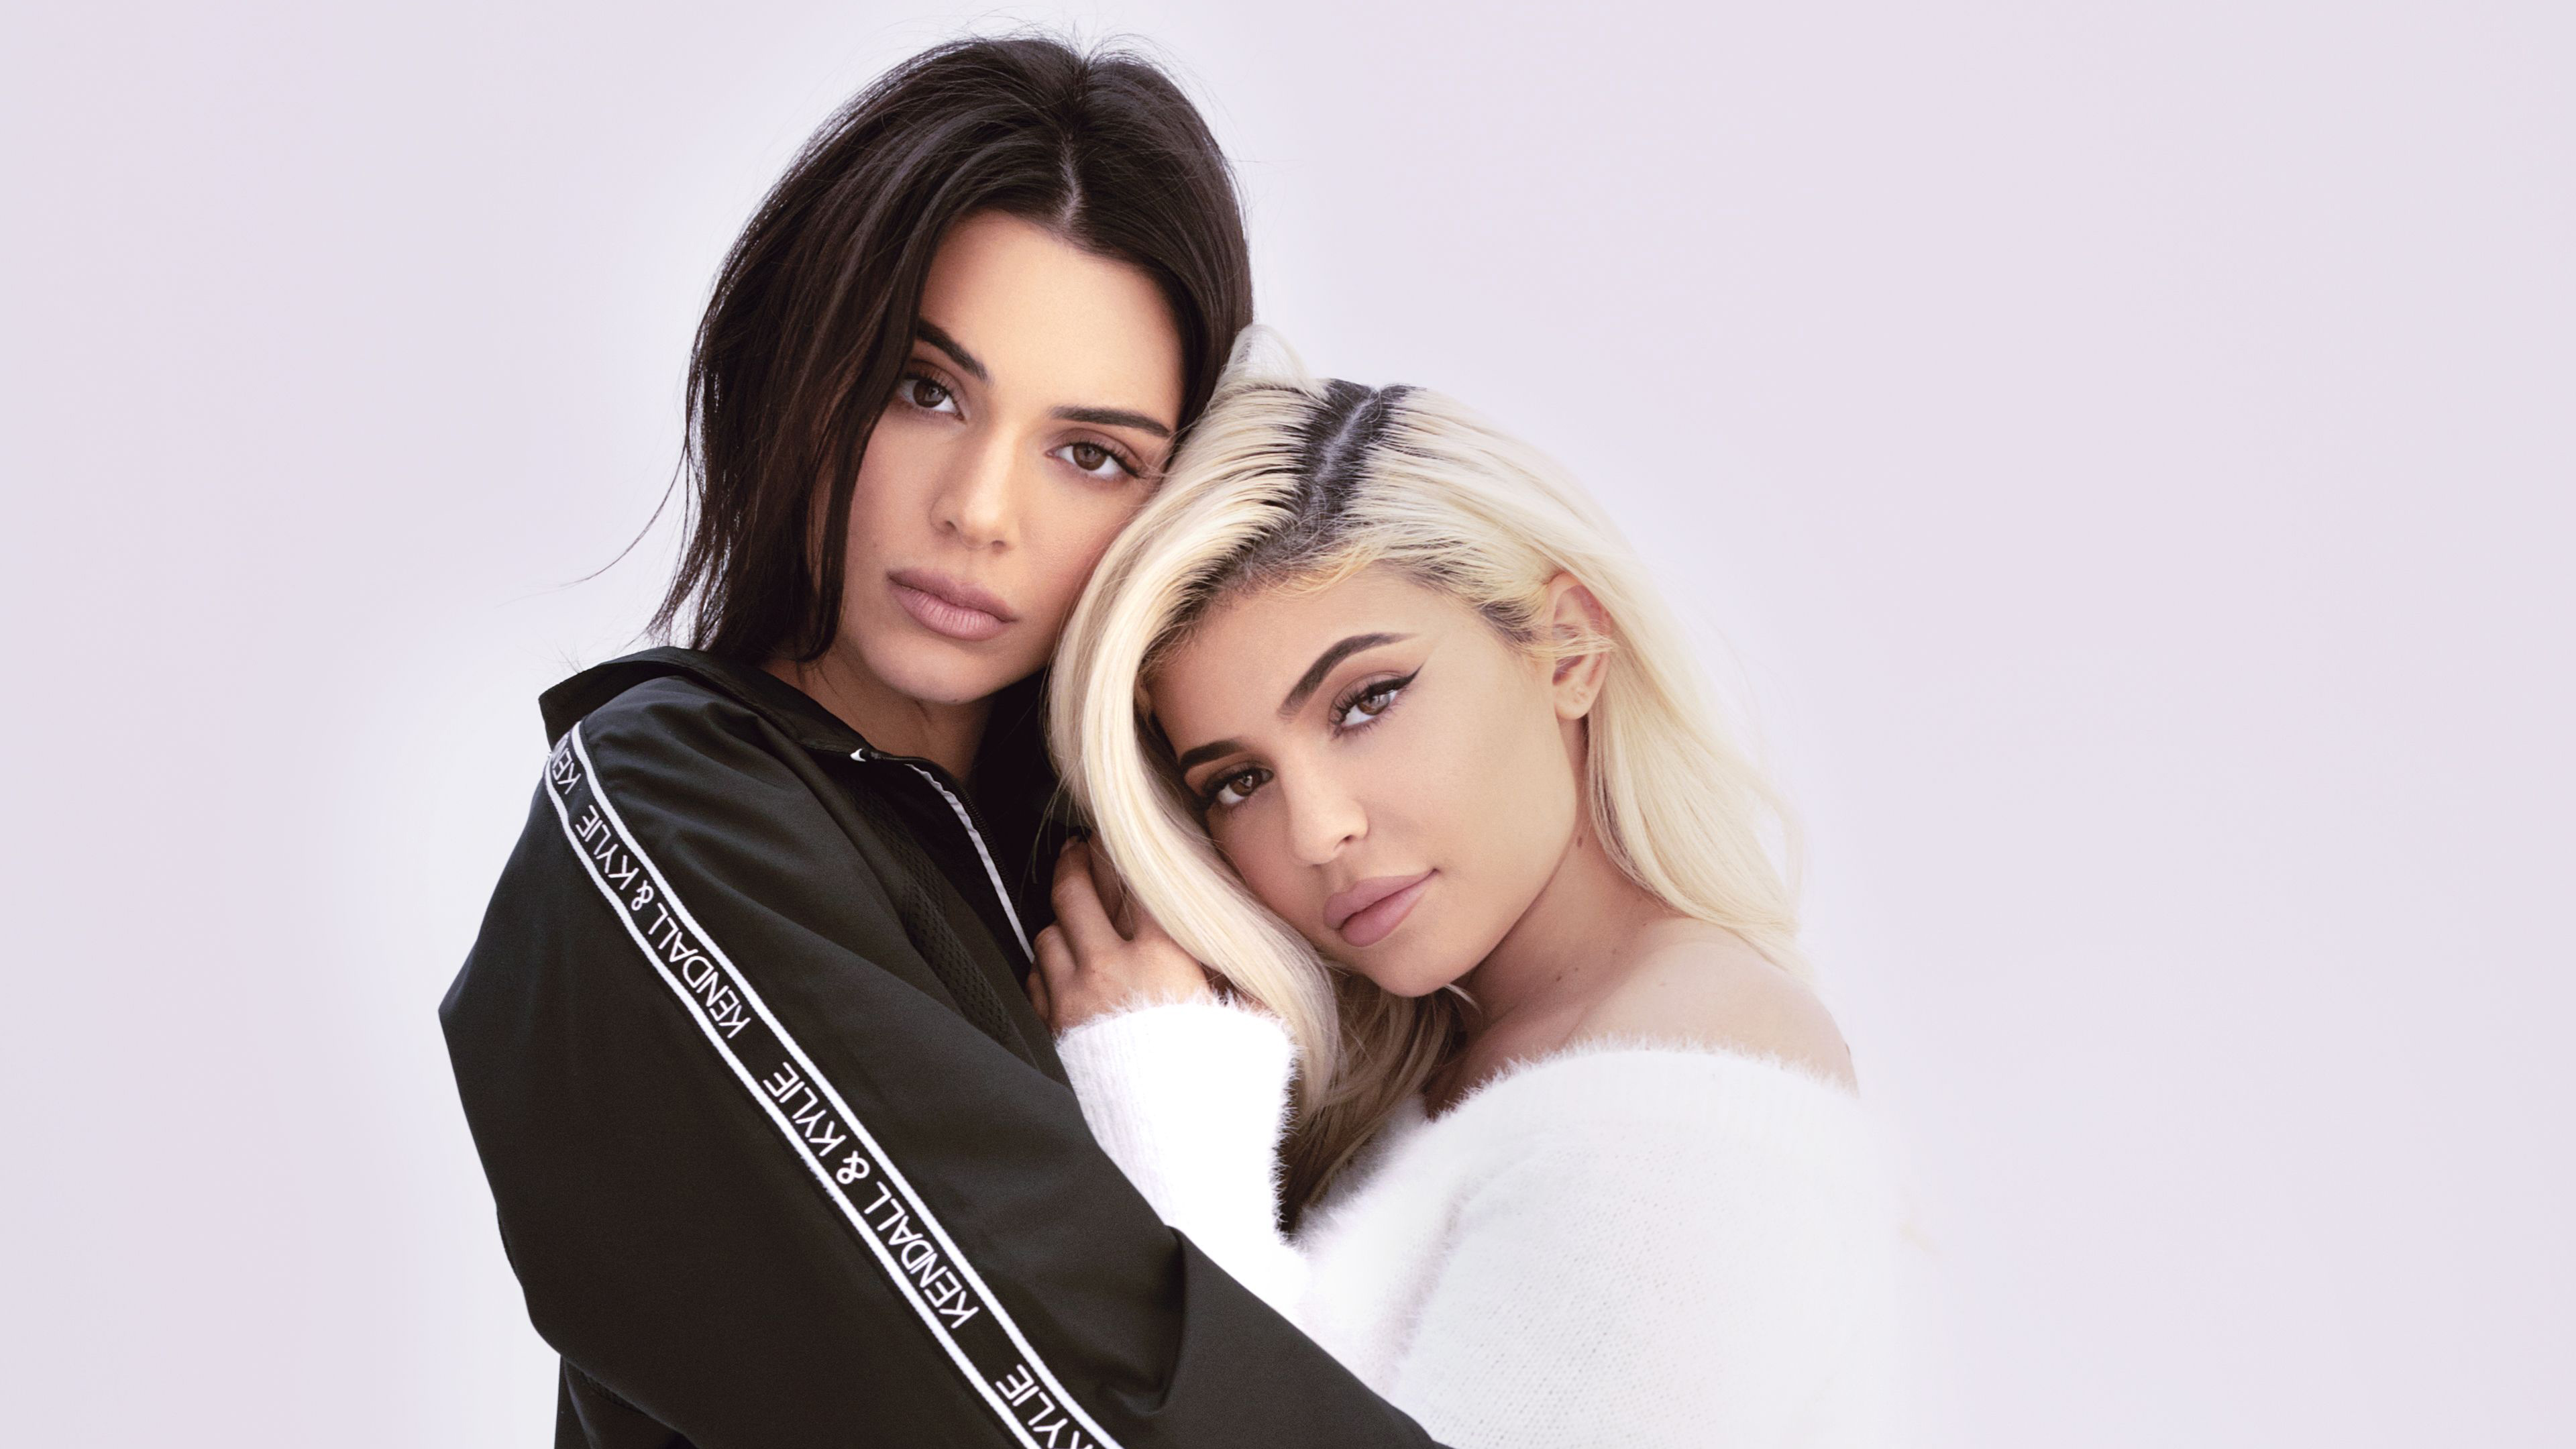 Kylie Jenner 4k Ultra HD Wallpaper Background Image